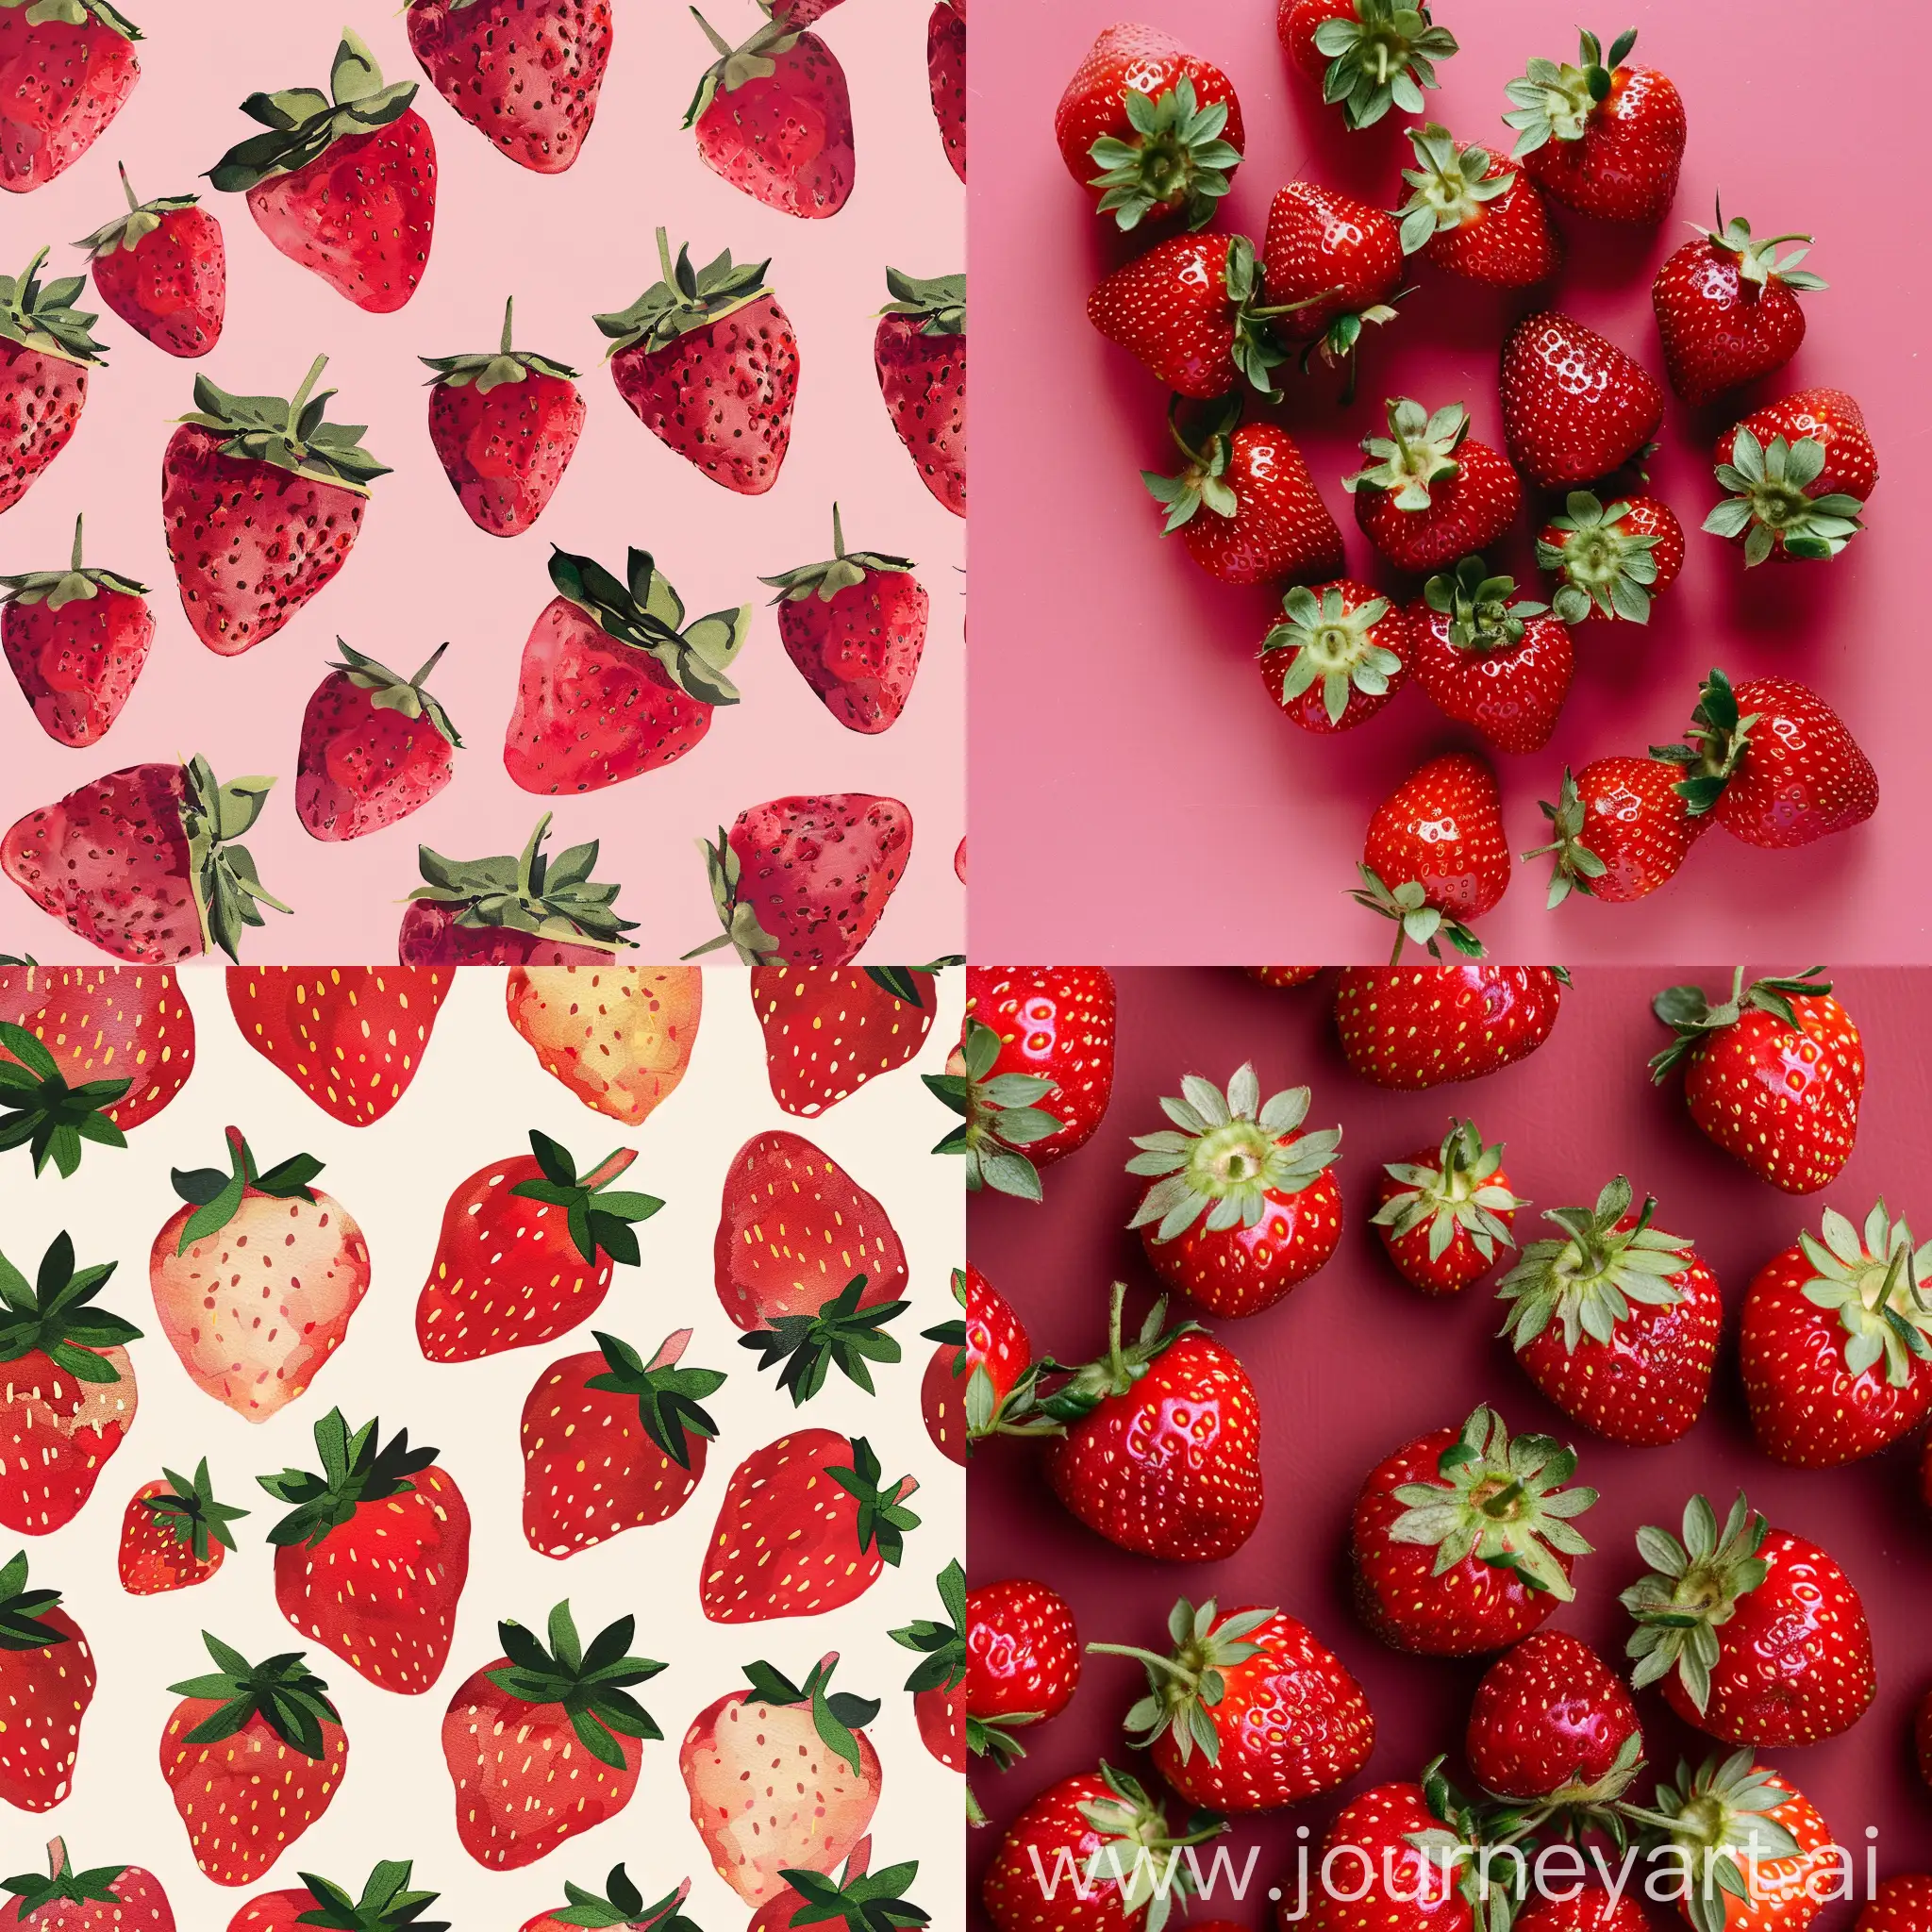 Cute aesthetic fashion strawberries wallapaper